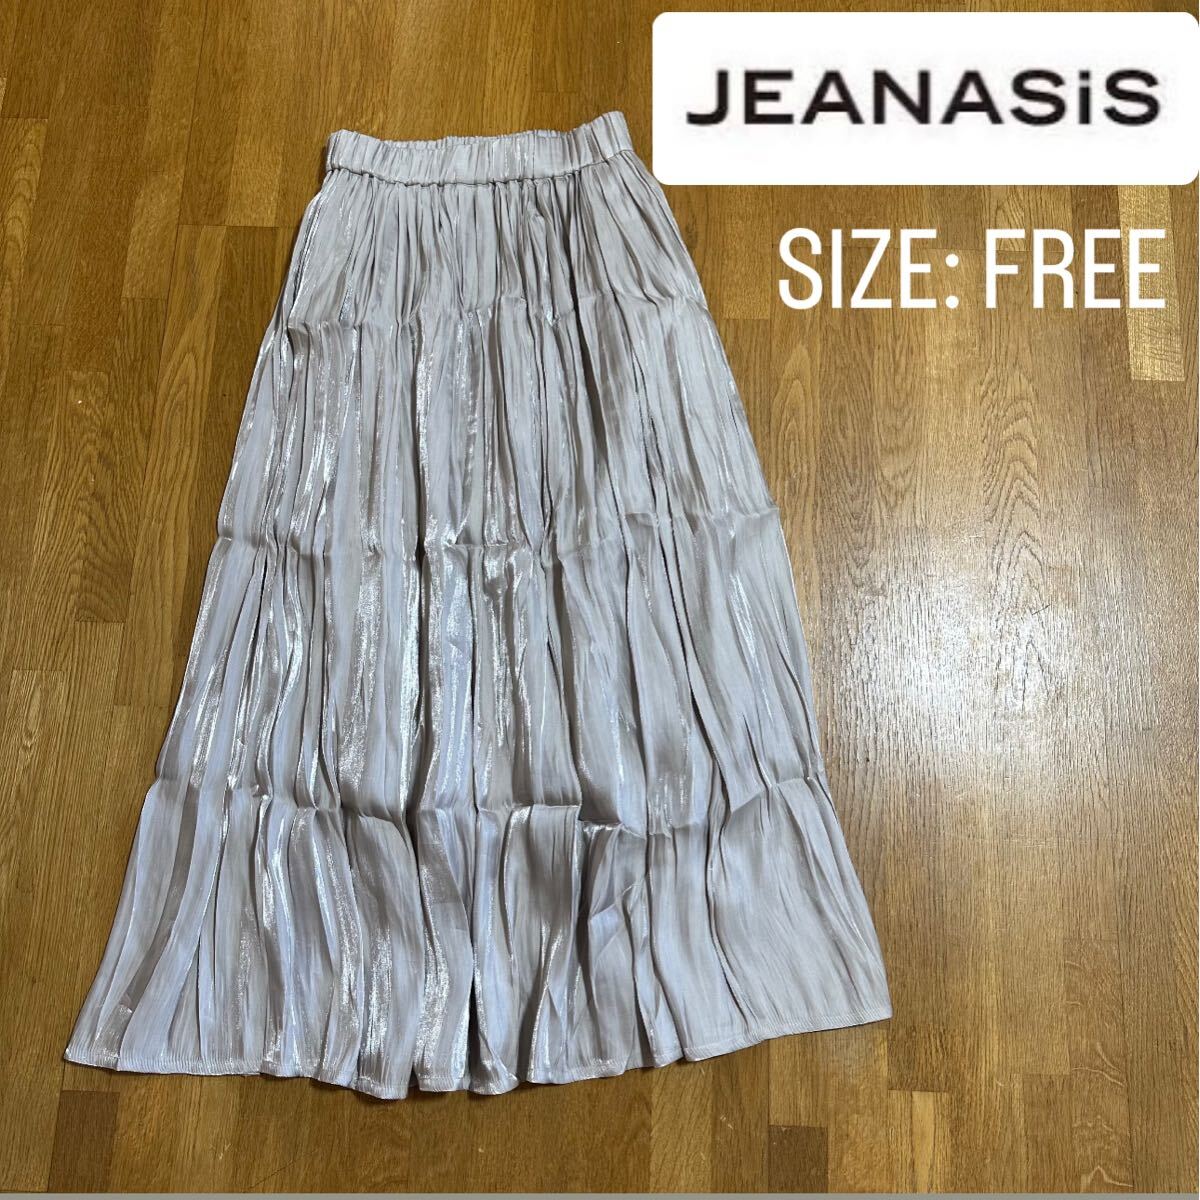 【JEANASIS】ジーナシス シャイニー プリーツスカート フリーサイズ_画像1